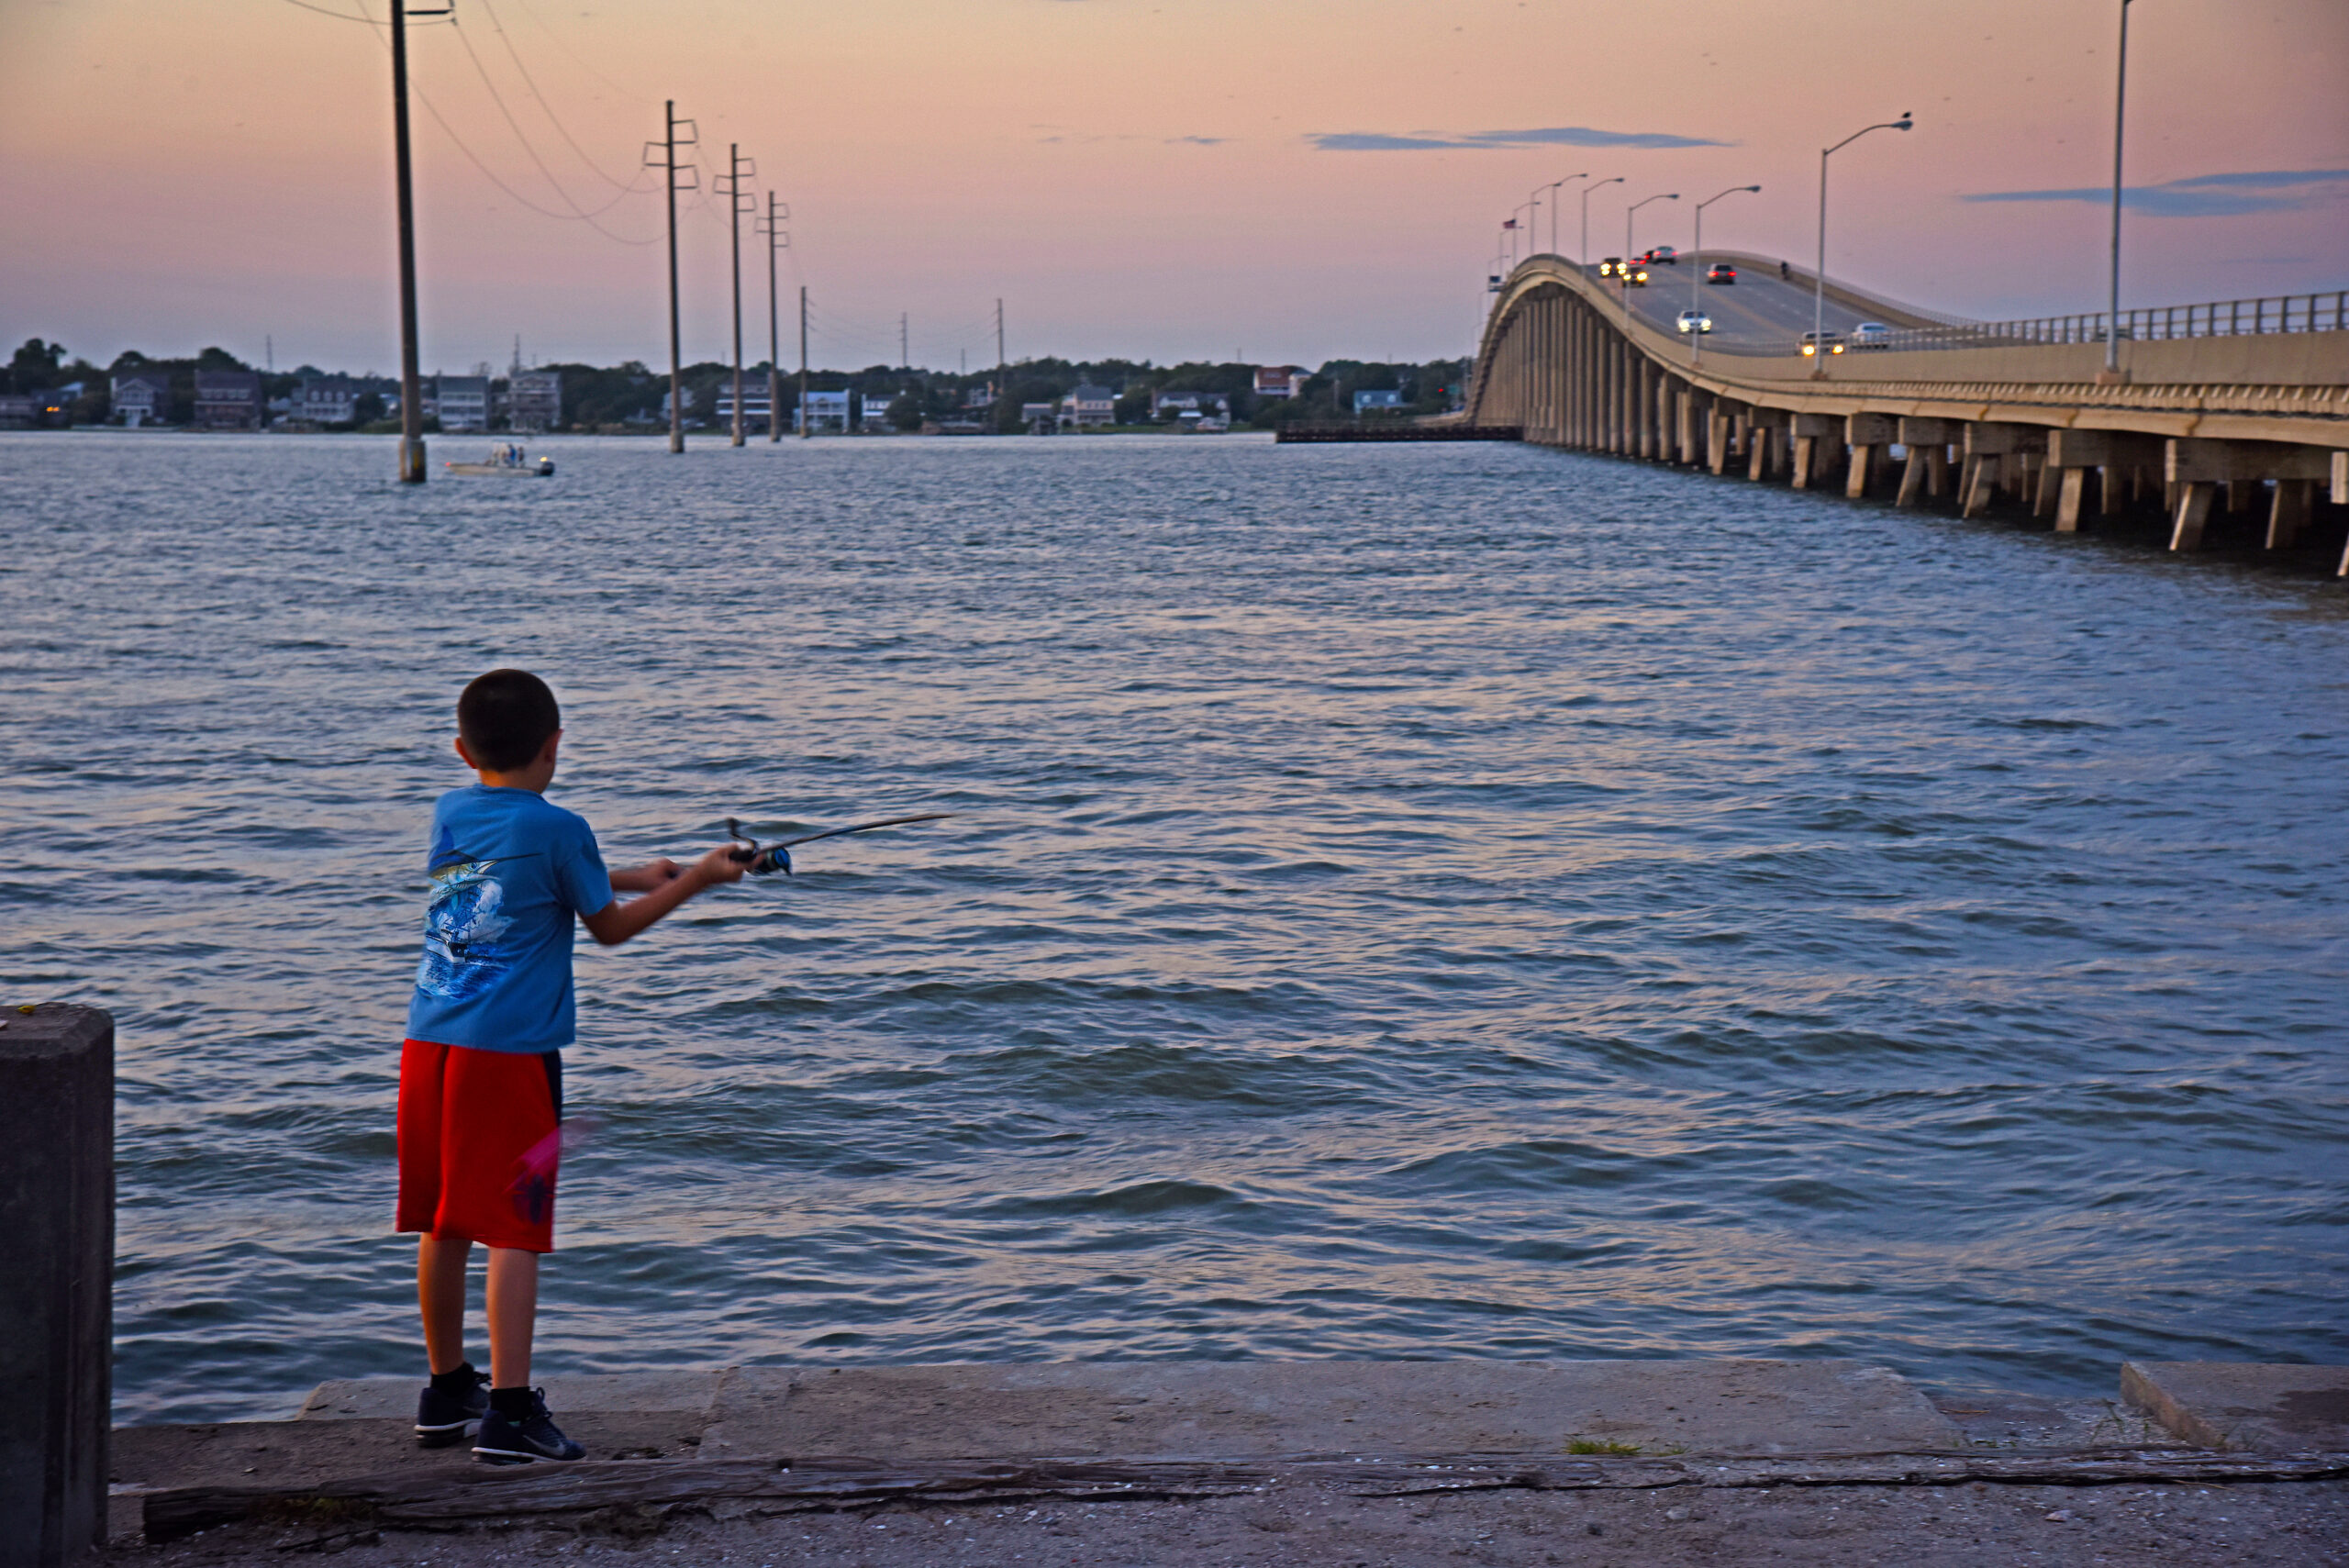 image: boy fishing.